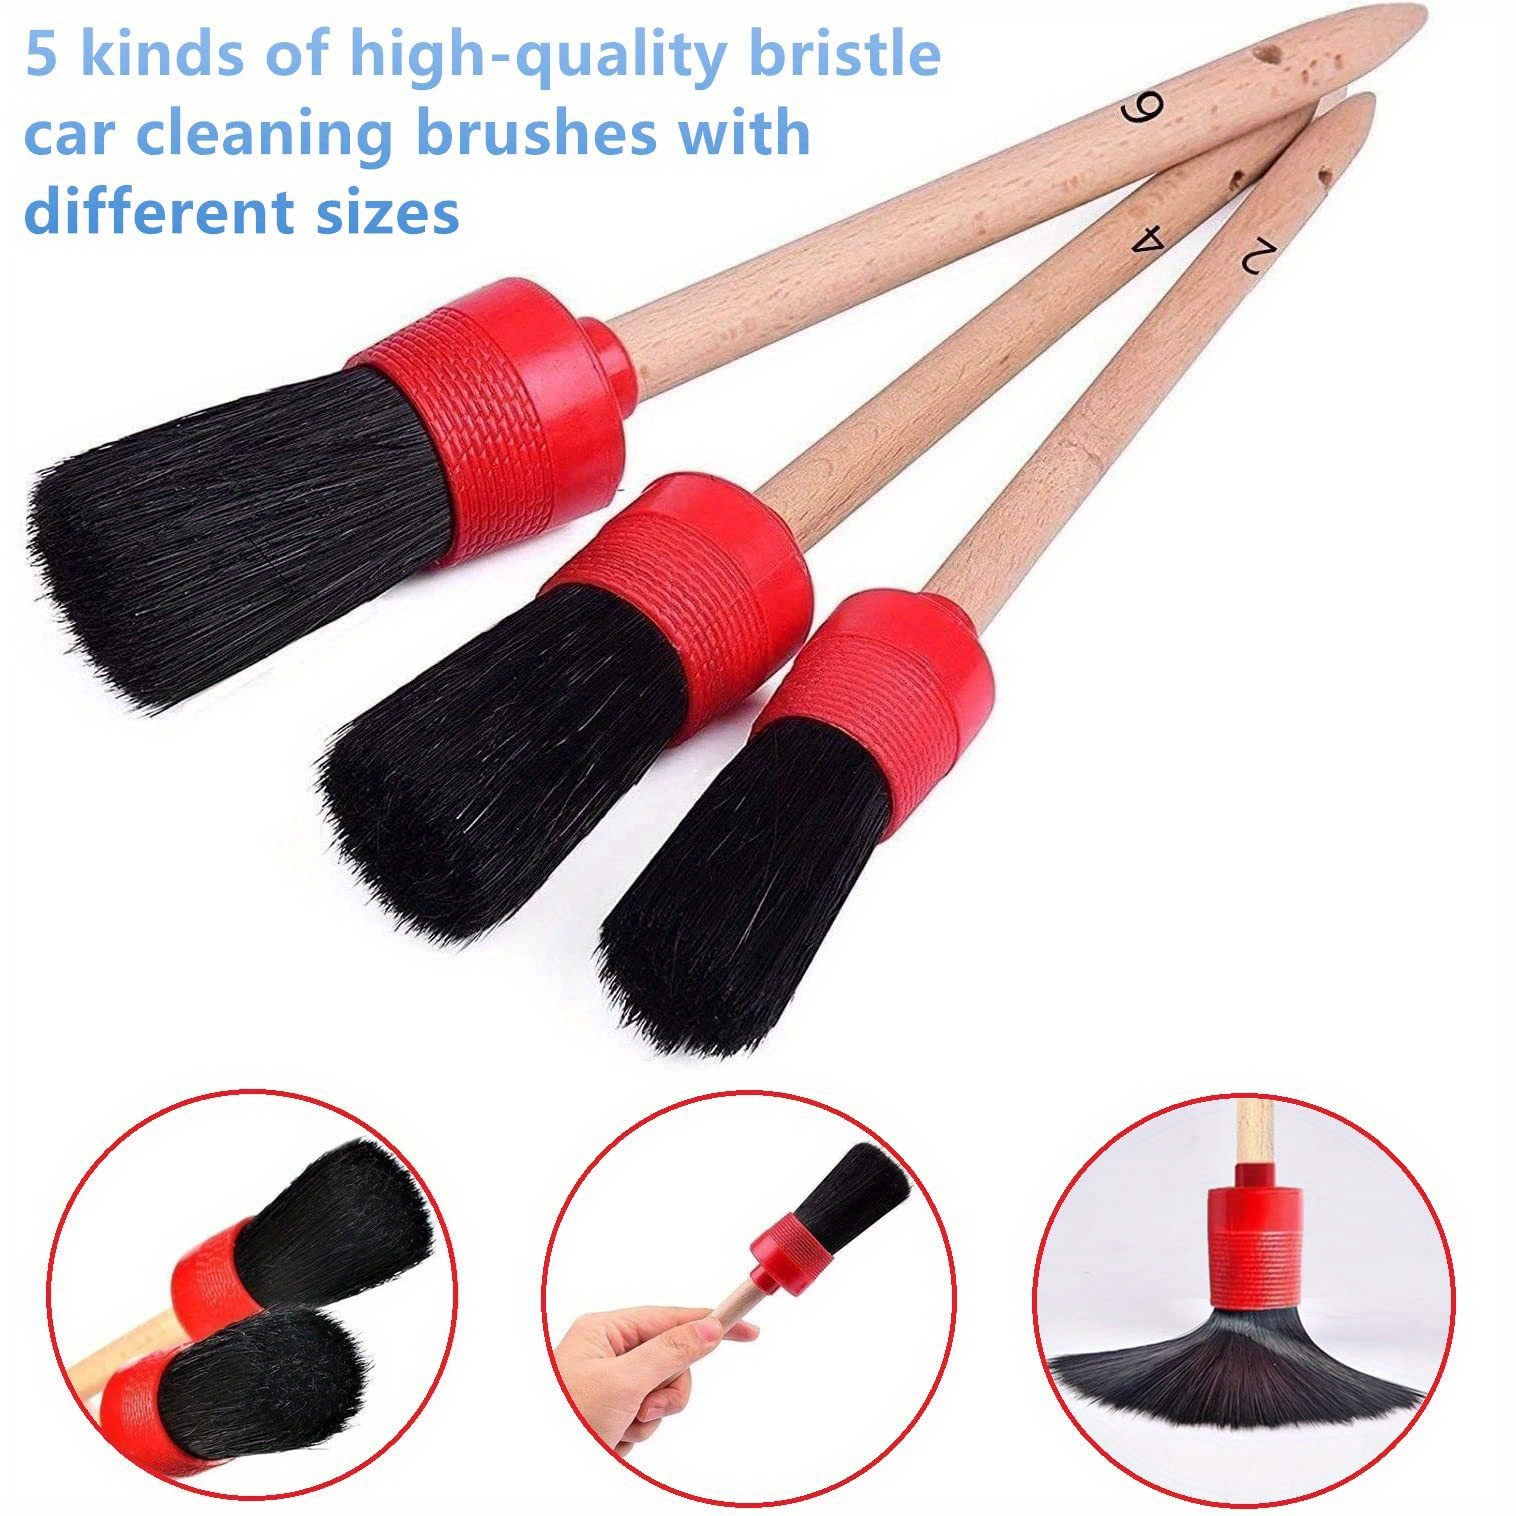 Car cleaning brushes, car detailing brushes Detail brush set of 5